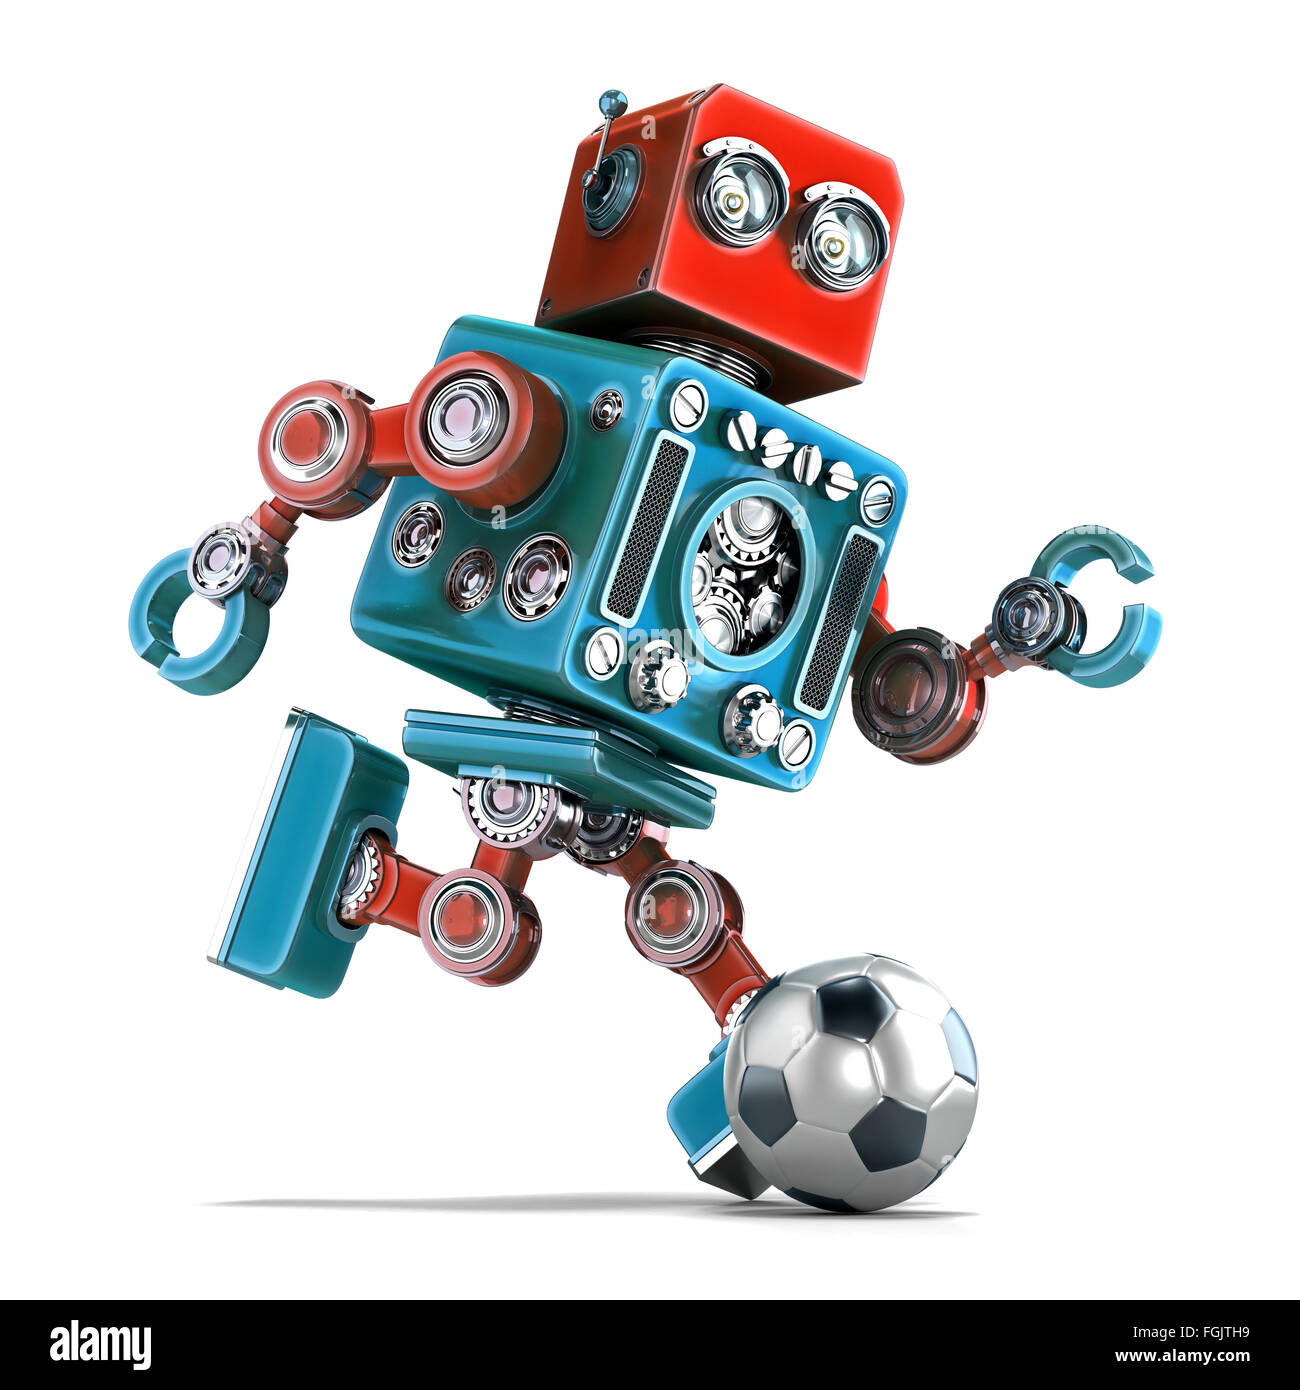 Robot soccer Imágenes recortadas de stock - Alamy